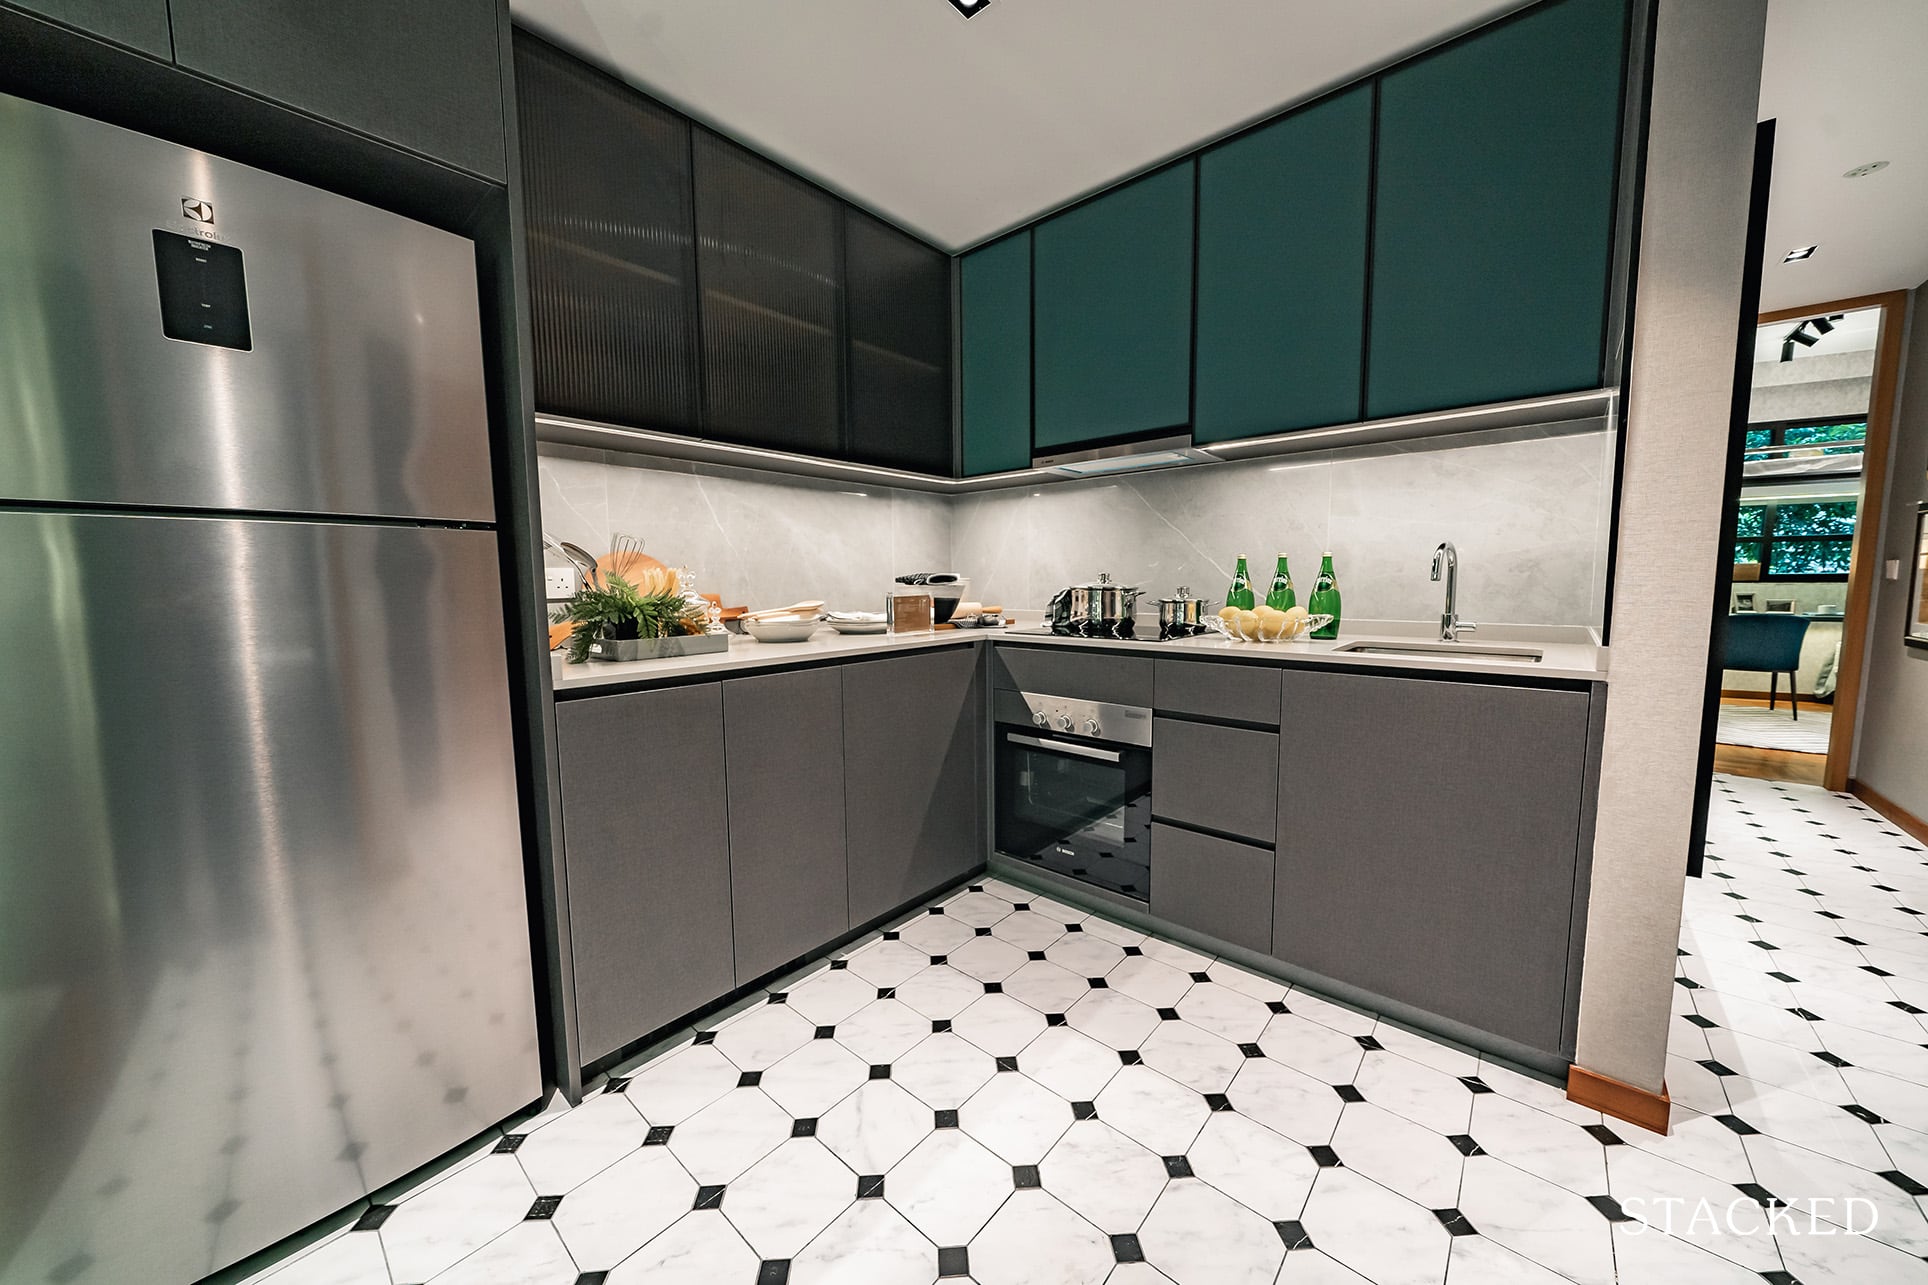 1953 condo 3 bedroom kitchen